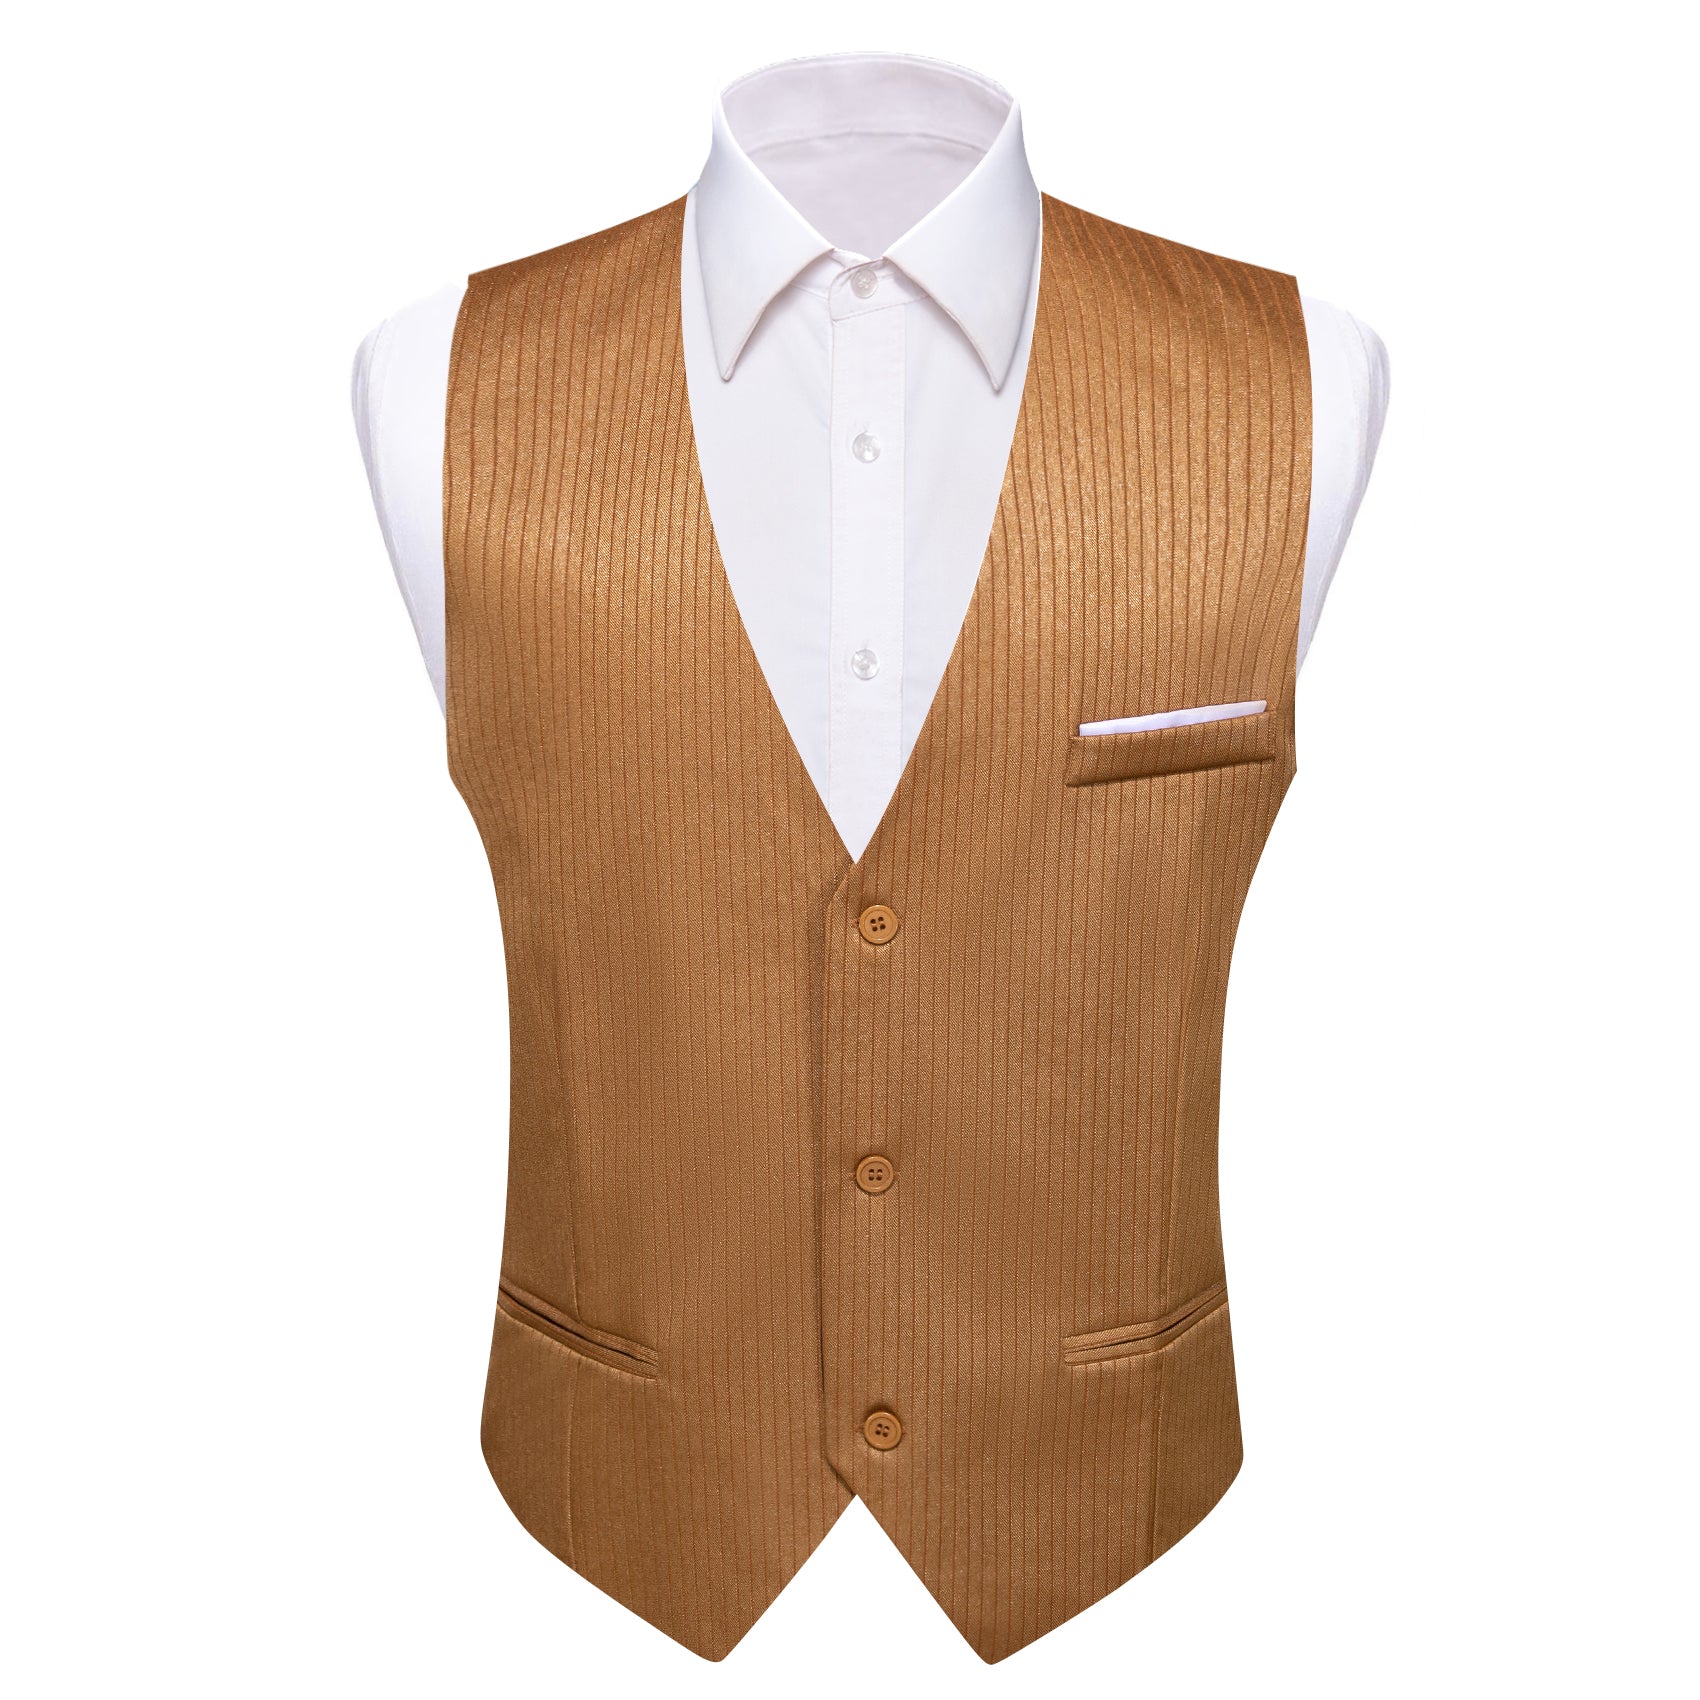 Barry.wang Peru Solid Business Vest Suit